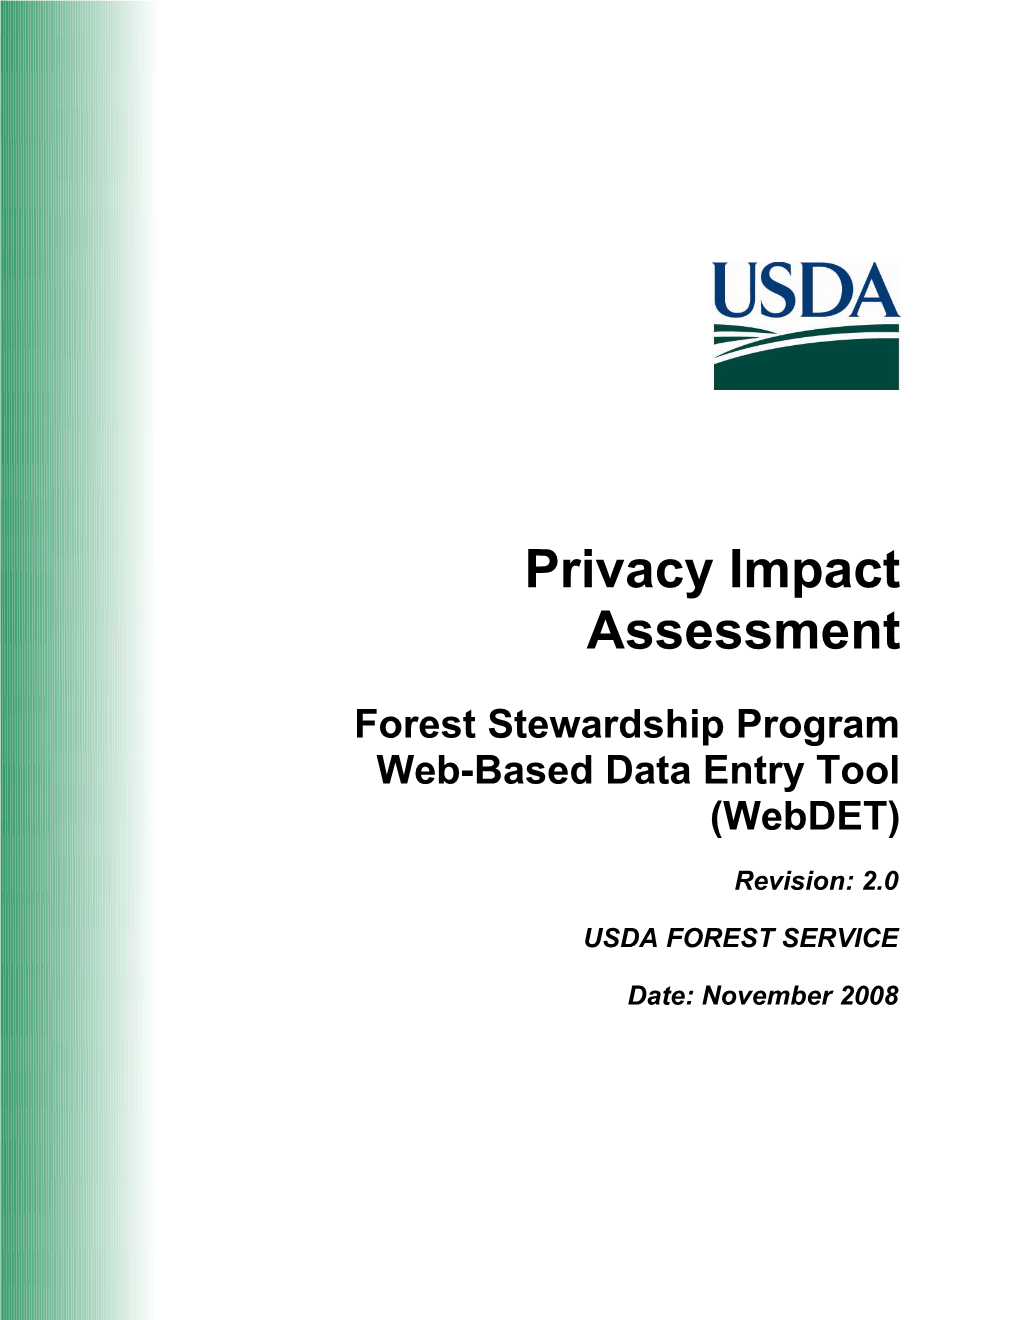 Forest Stewardship Program Web-Based Data Entry Tool (Webdet)